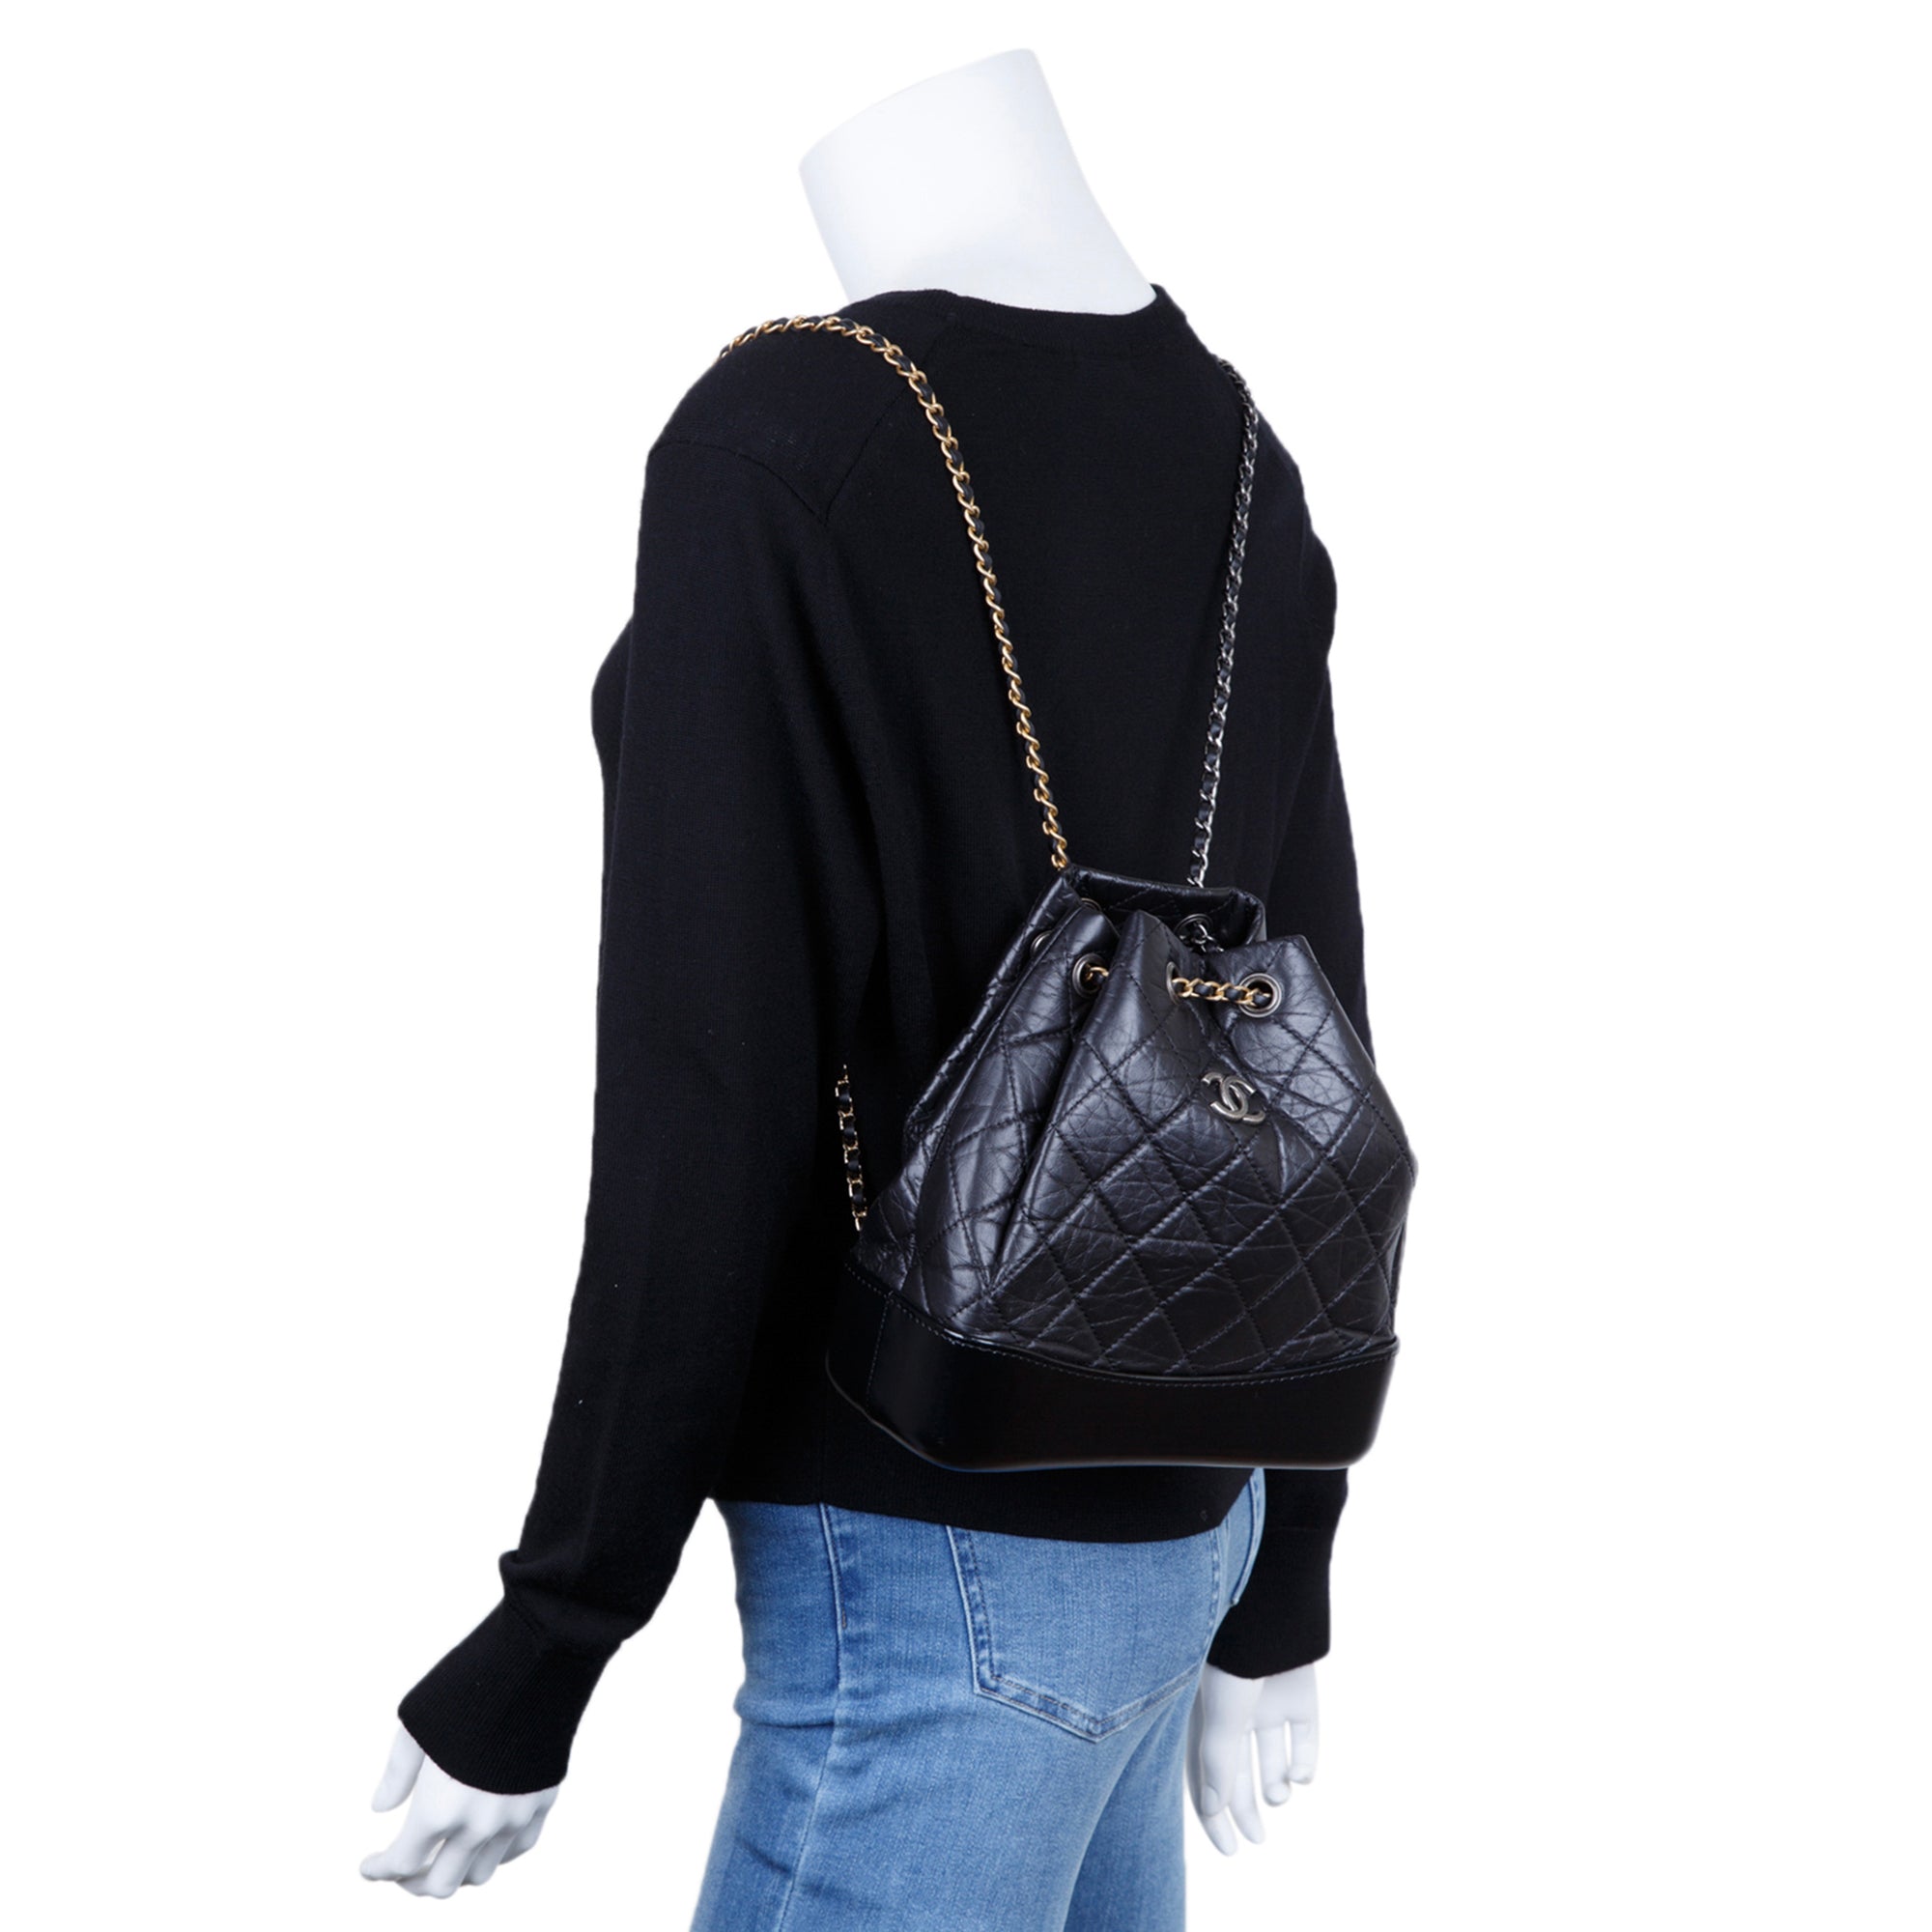 Chanel Small Gabrielle Backpack - Neutrals Backpacks, Handbags